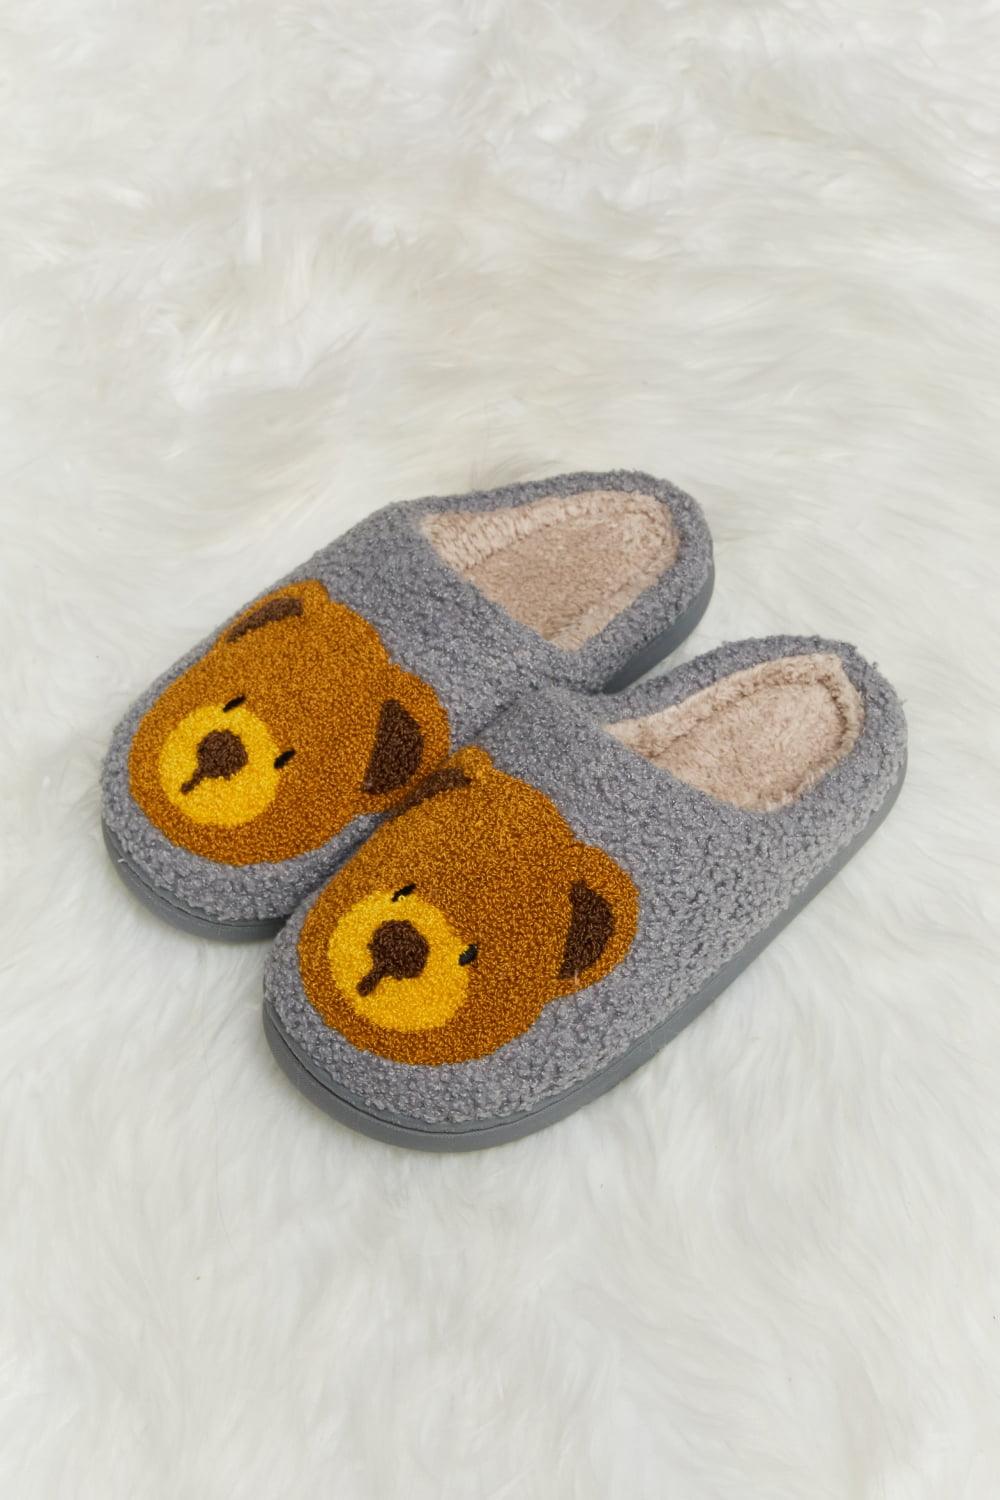 Women's Shoes - Slippers Teddy Bear Print Plush Slippers